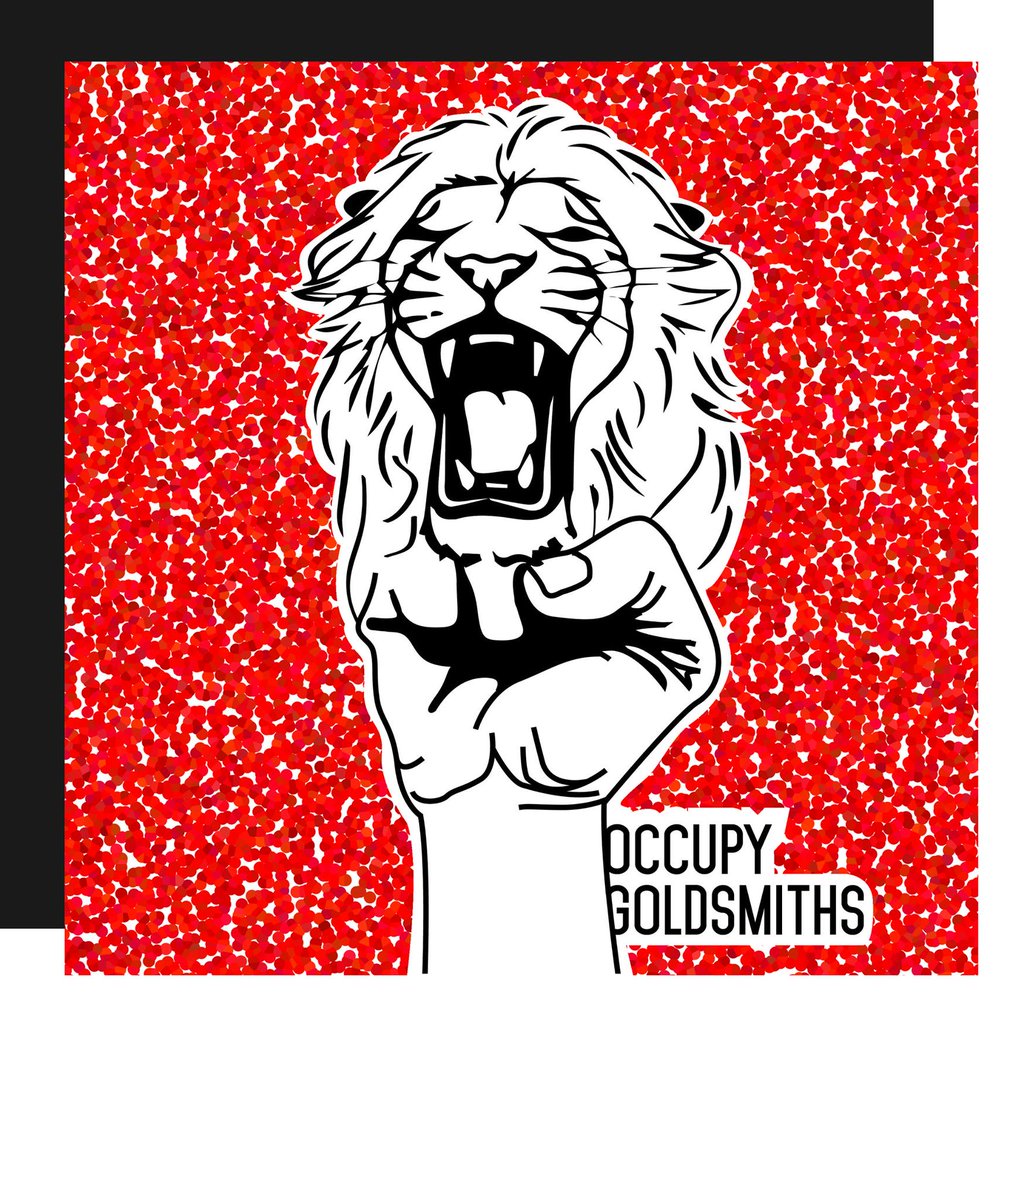 #OccupyGoldsmiths @occupygsmiths